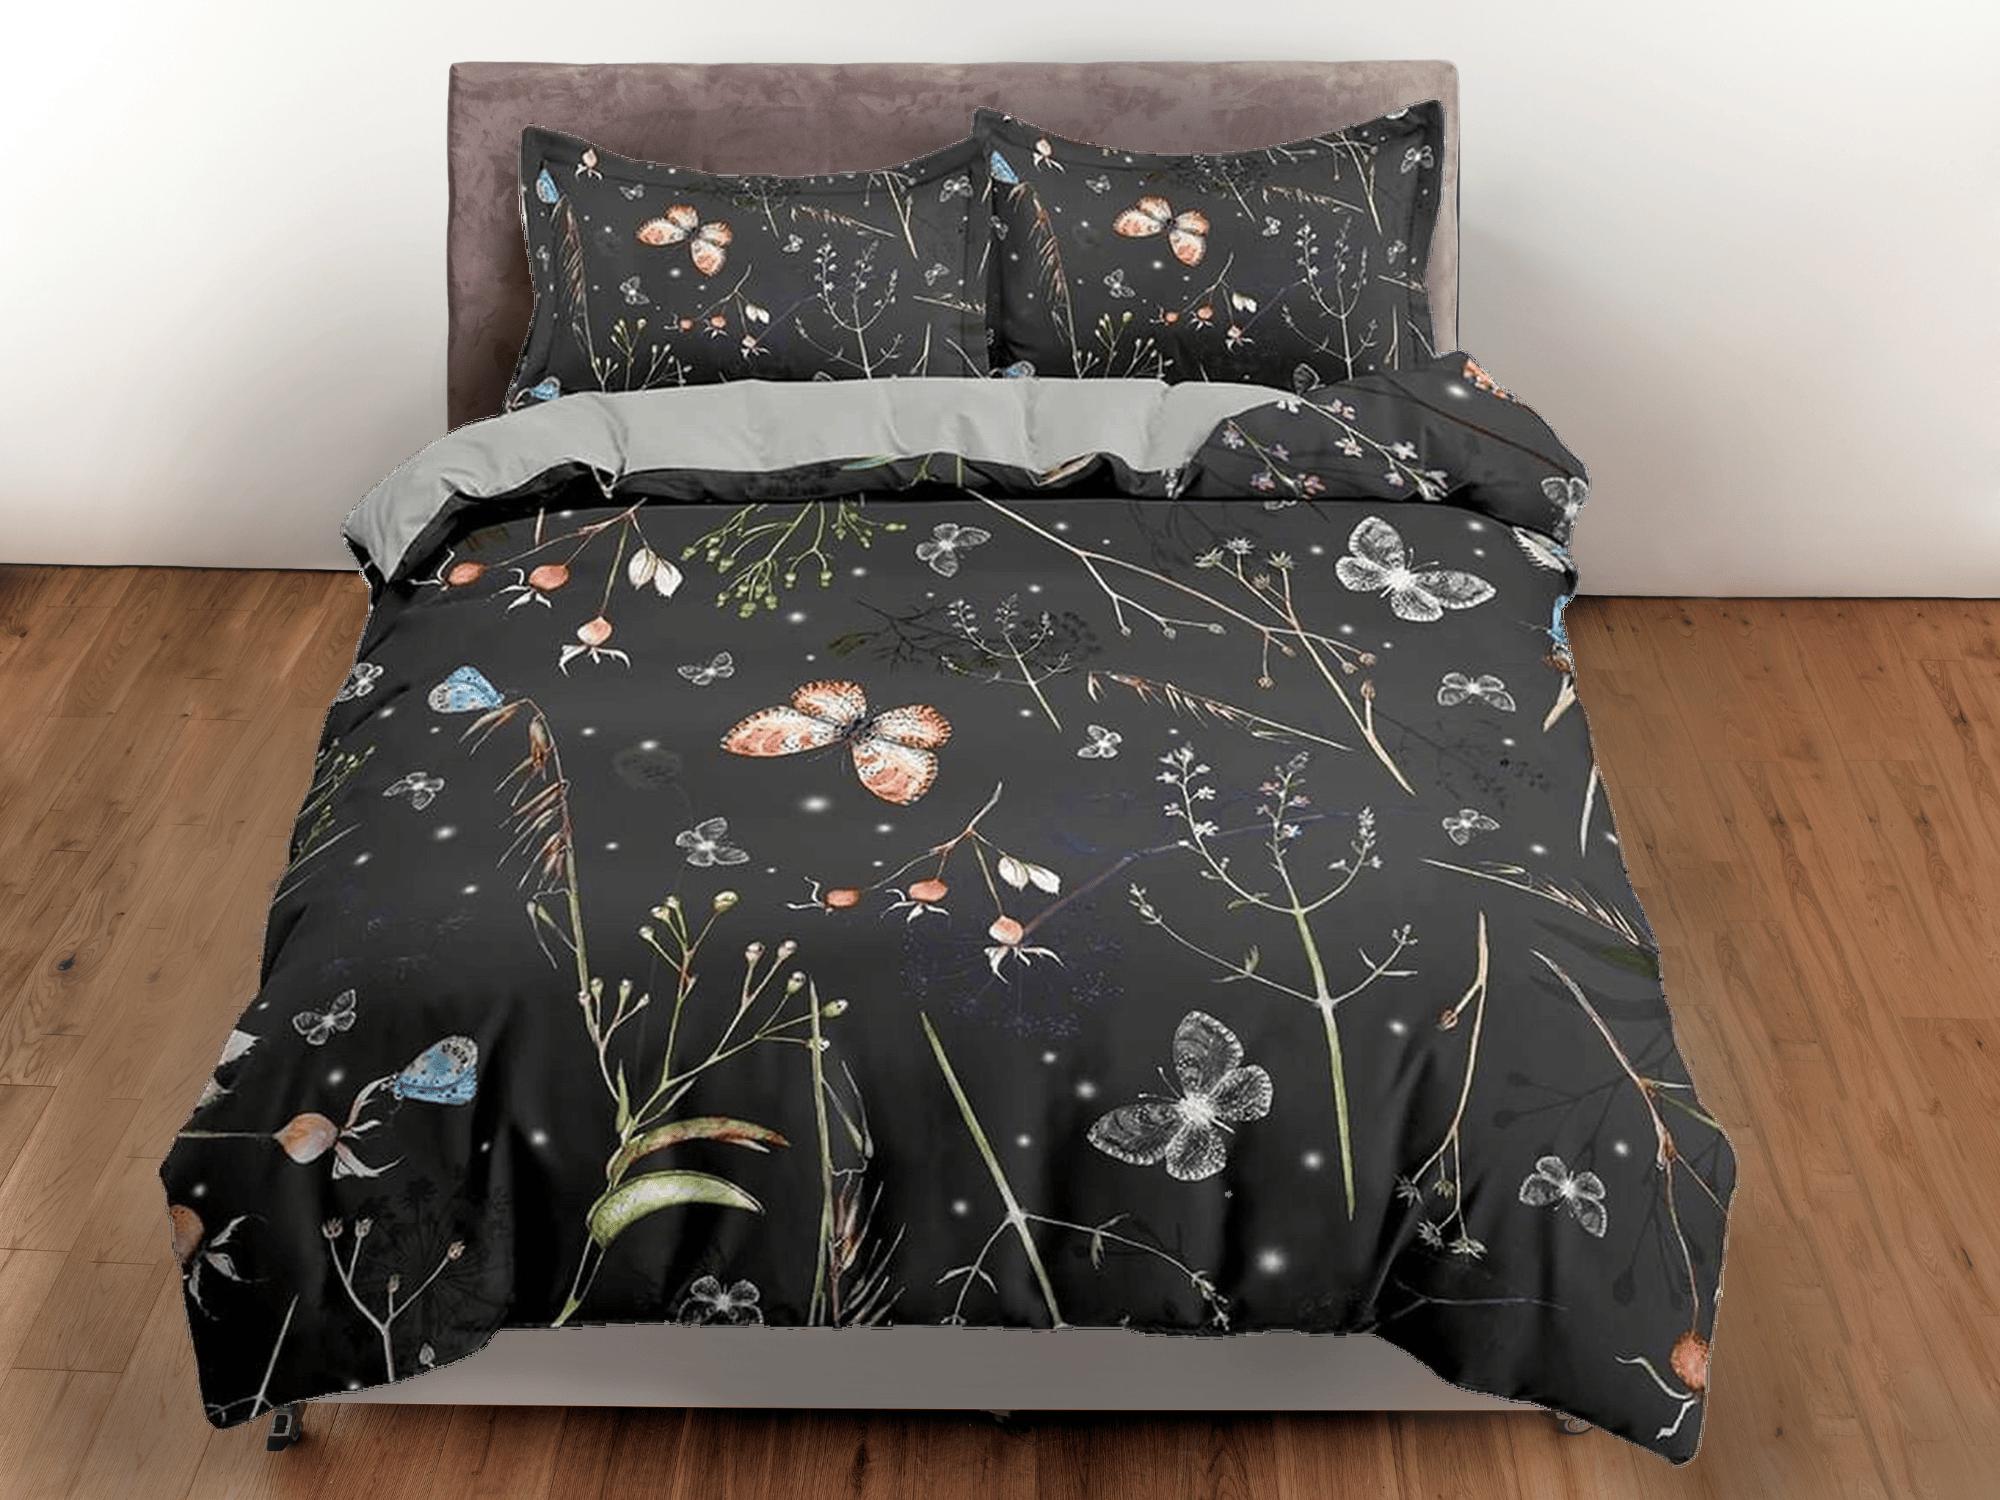 daintyduvet Botanical butterfly bedding black duvet cover colorful dorm bedding, full size adult duvet king queen twin, nursery toddler bedding